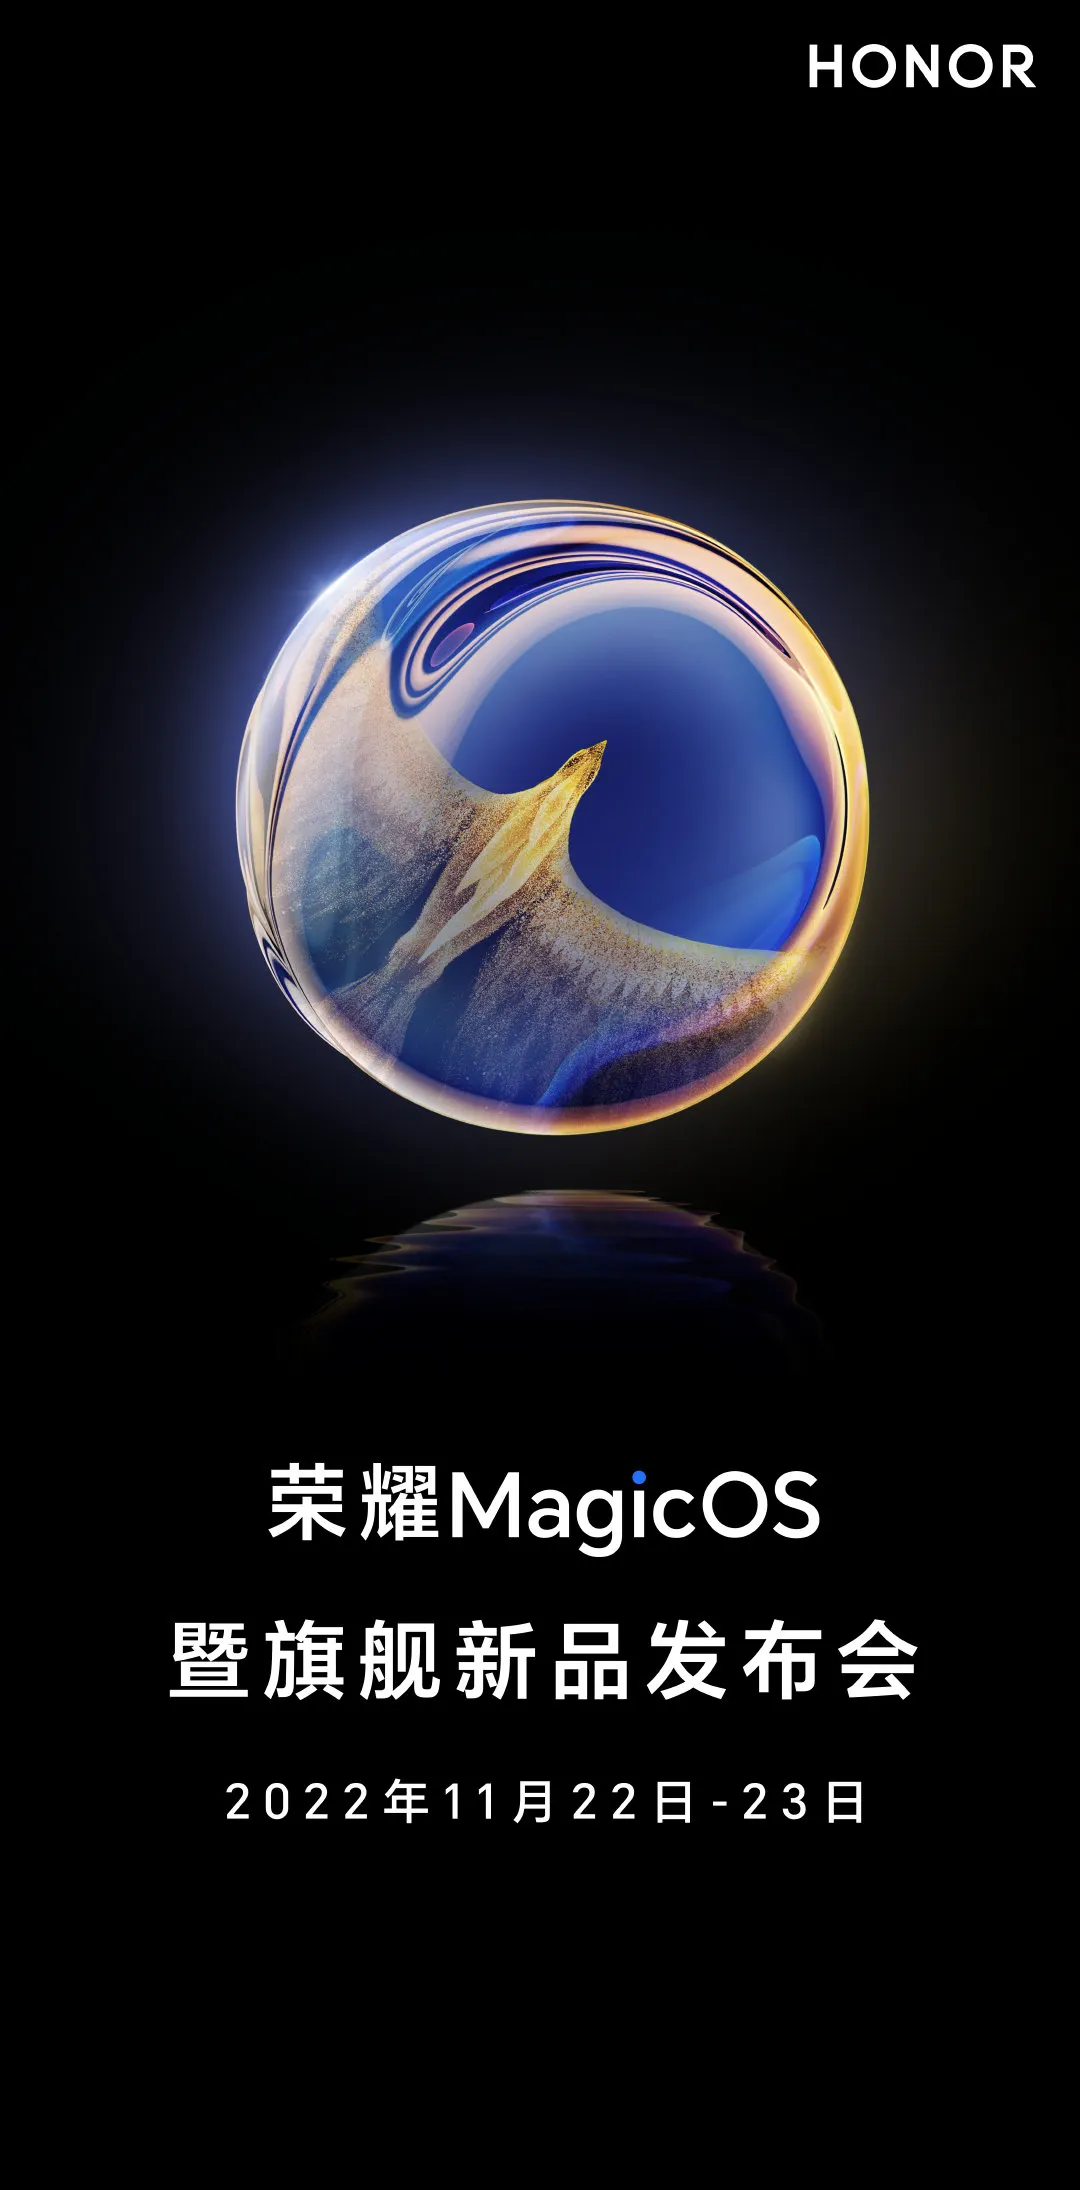 MagicOS 7.0 release date set